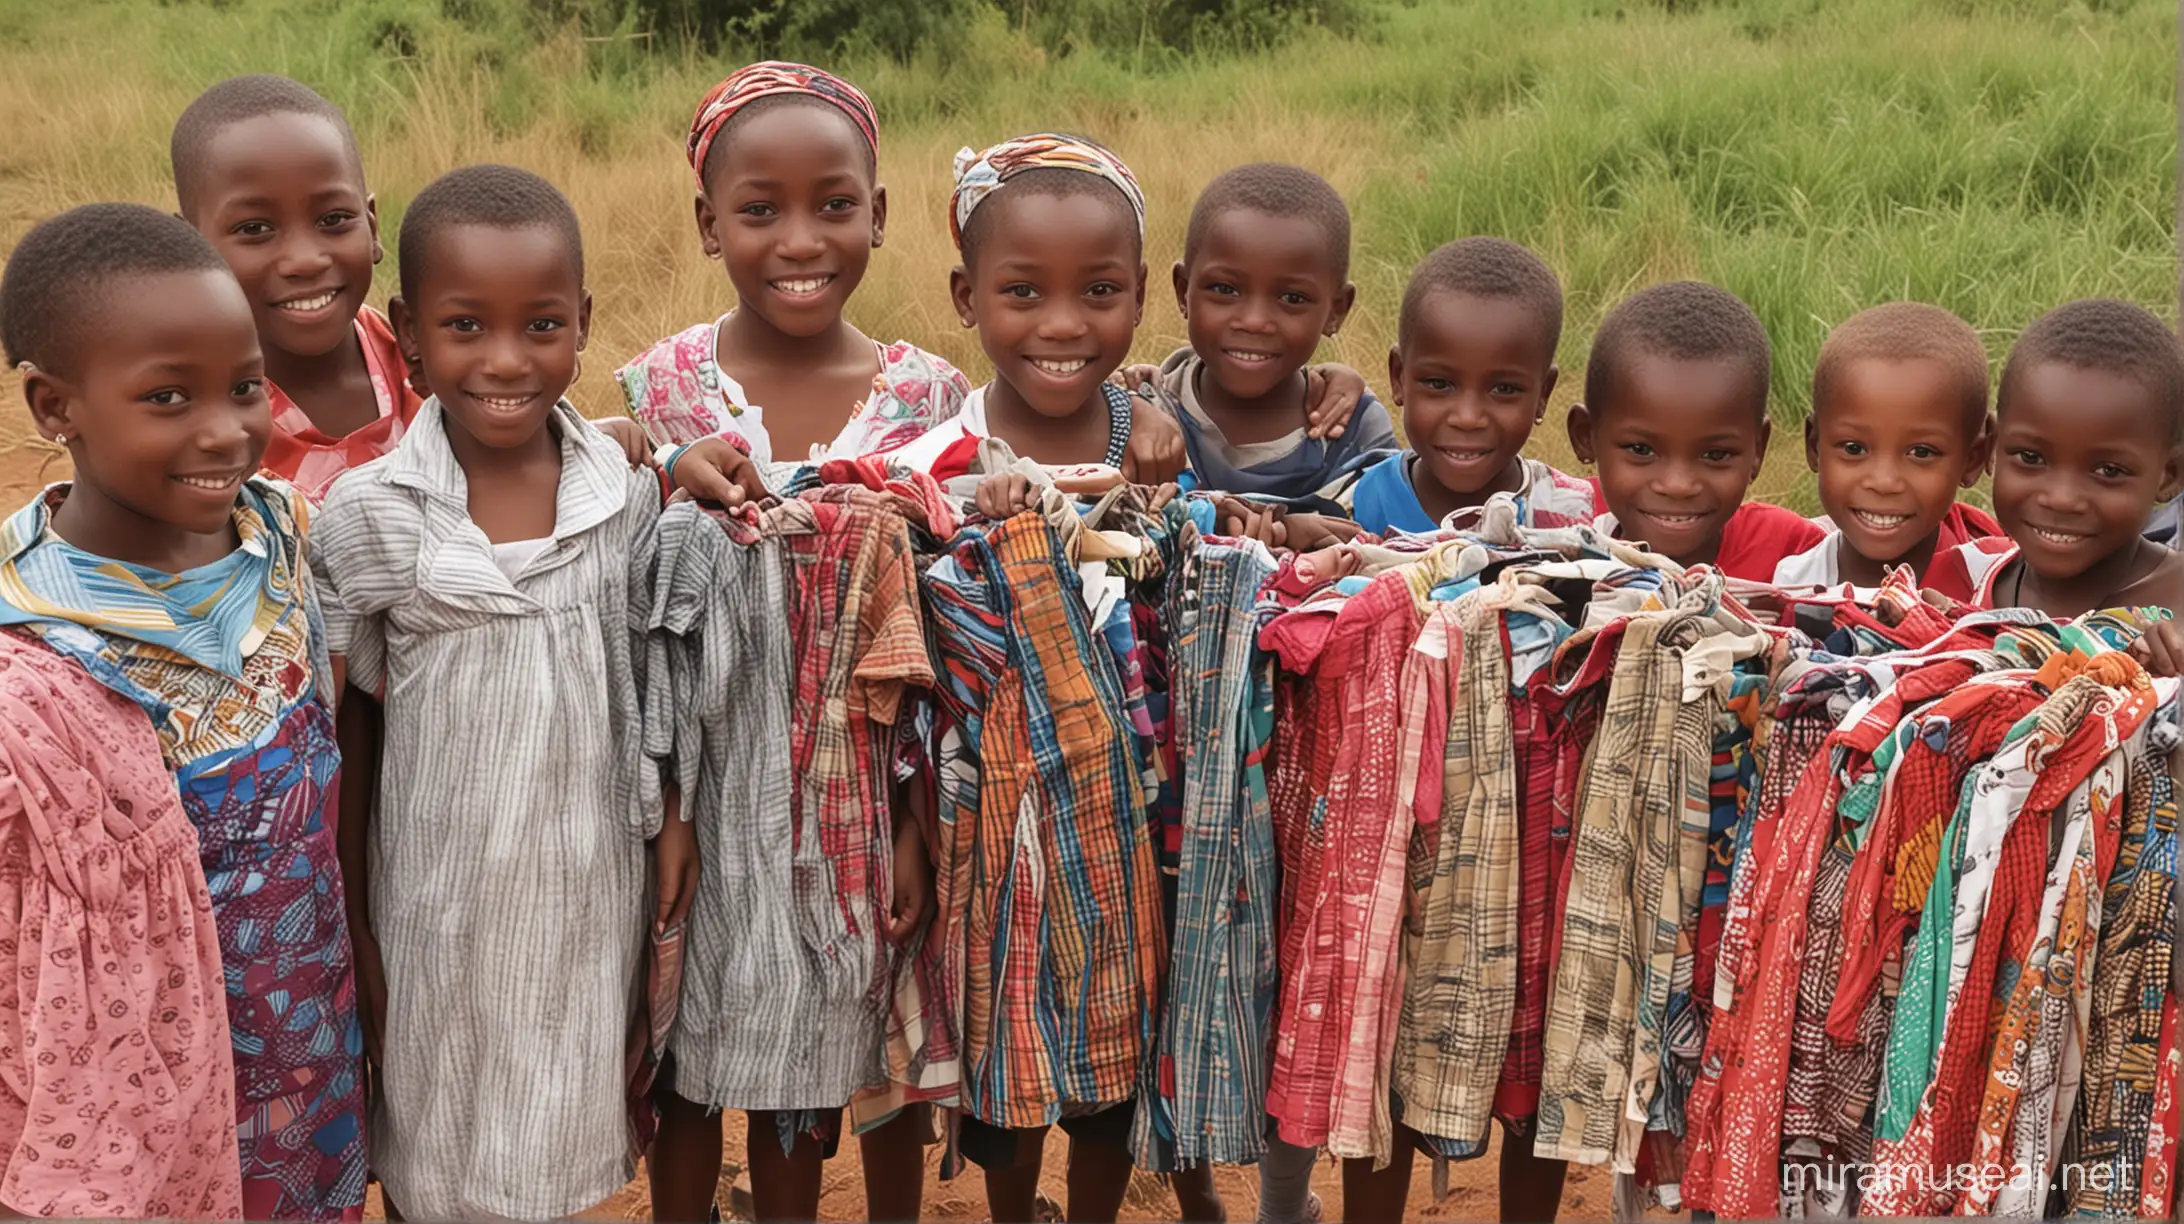 African Children Wearing Donated Clothing Smiling Joyfully